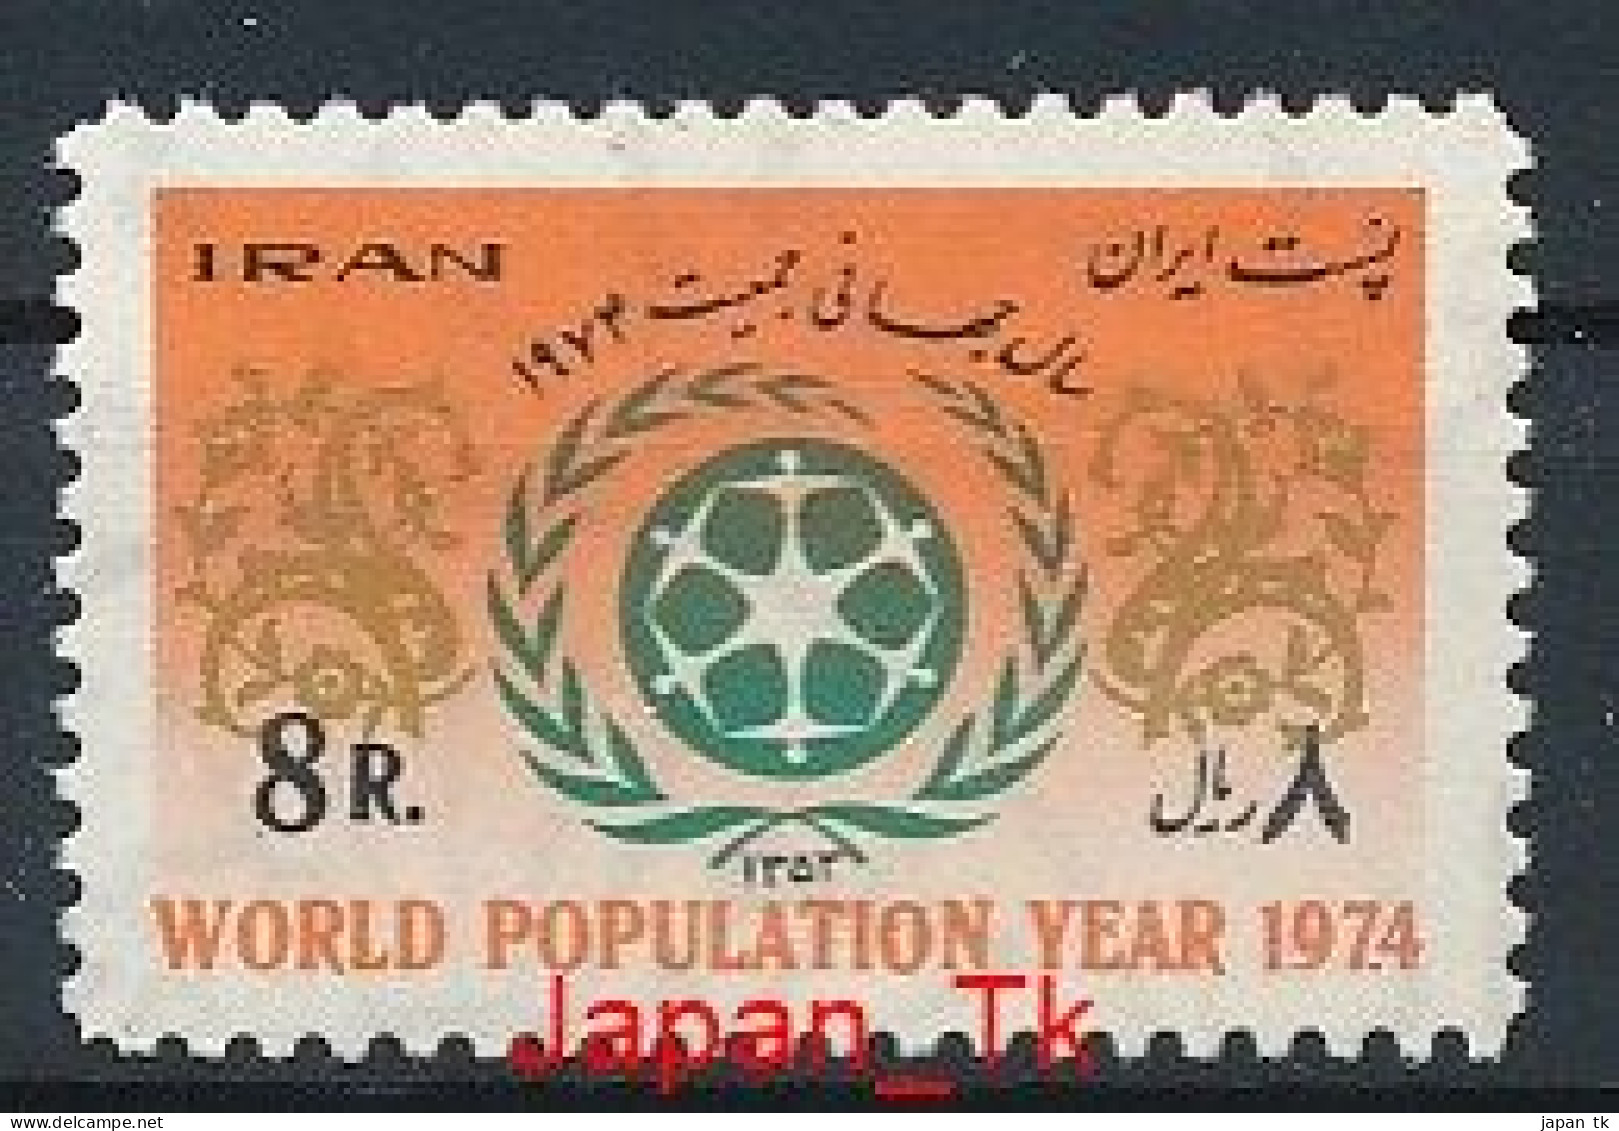 IRAN Mi. Nr. 1765 Weltbevölkerungsjahr - MNH - Iran